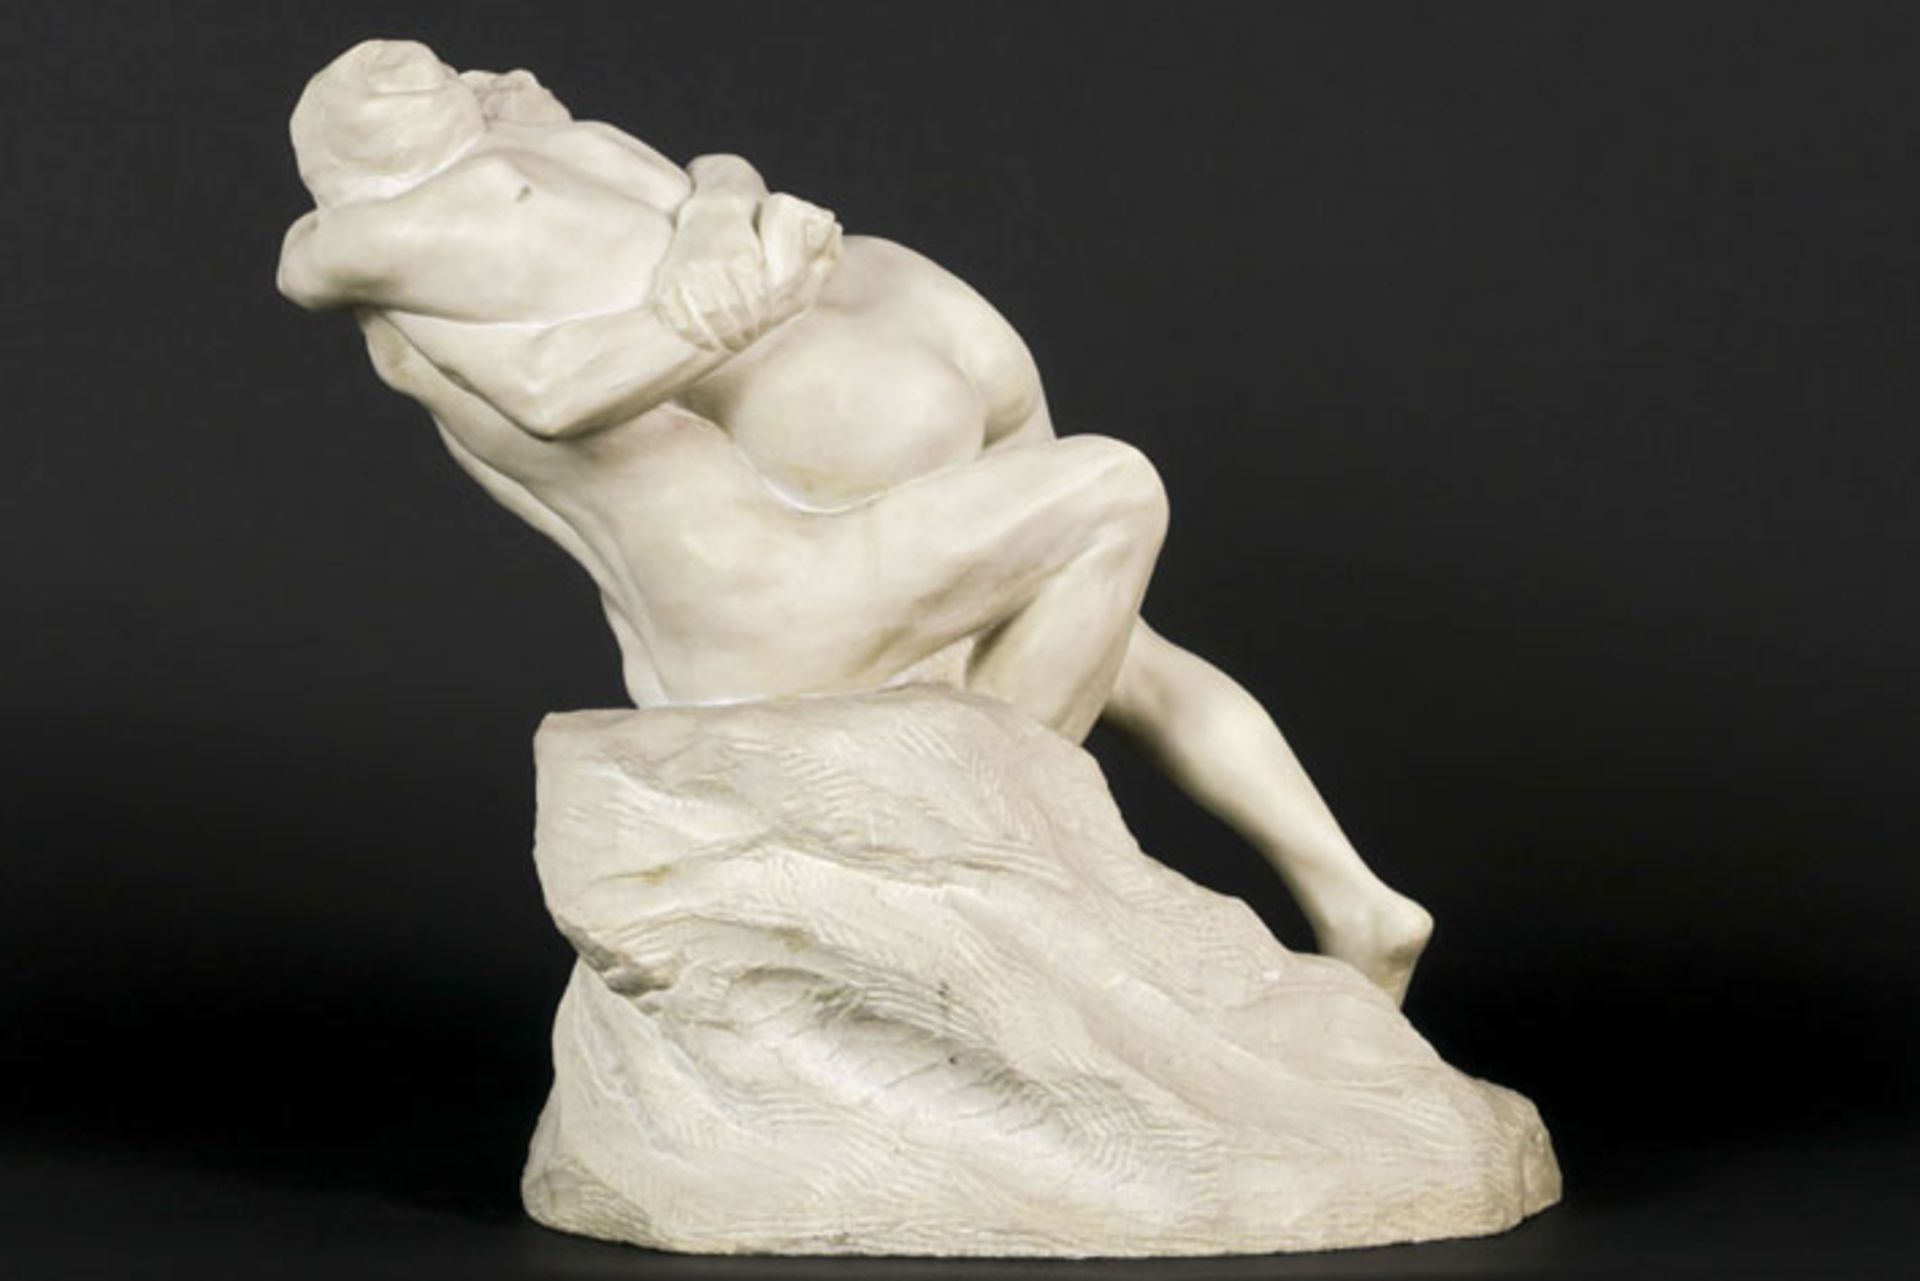 19th/20th Cent. Belgian sculpture in marble - signed Godefroid de Vreese - - DE [...] - Bild 3 aus 5